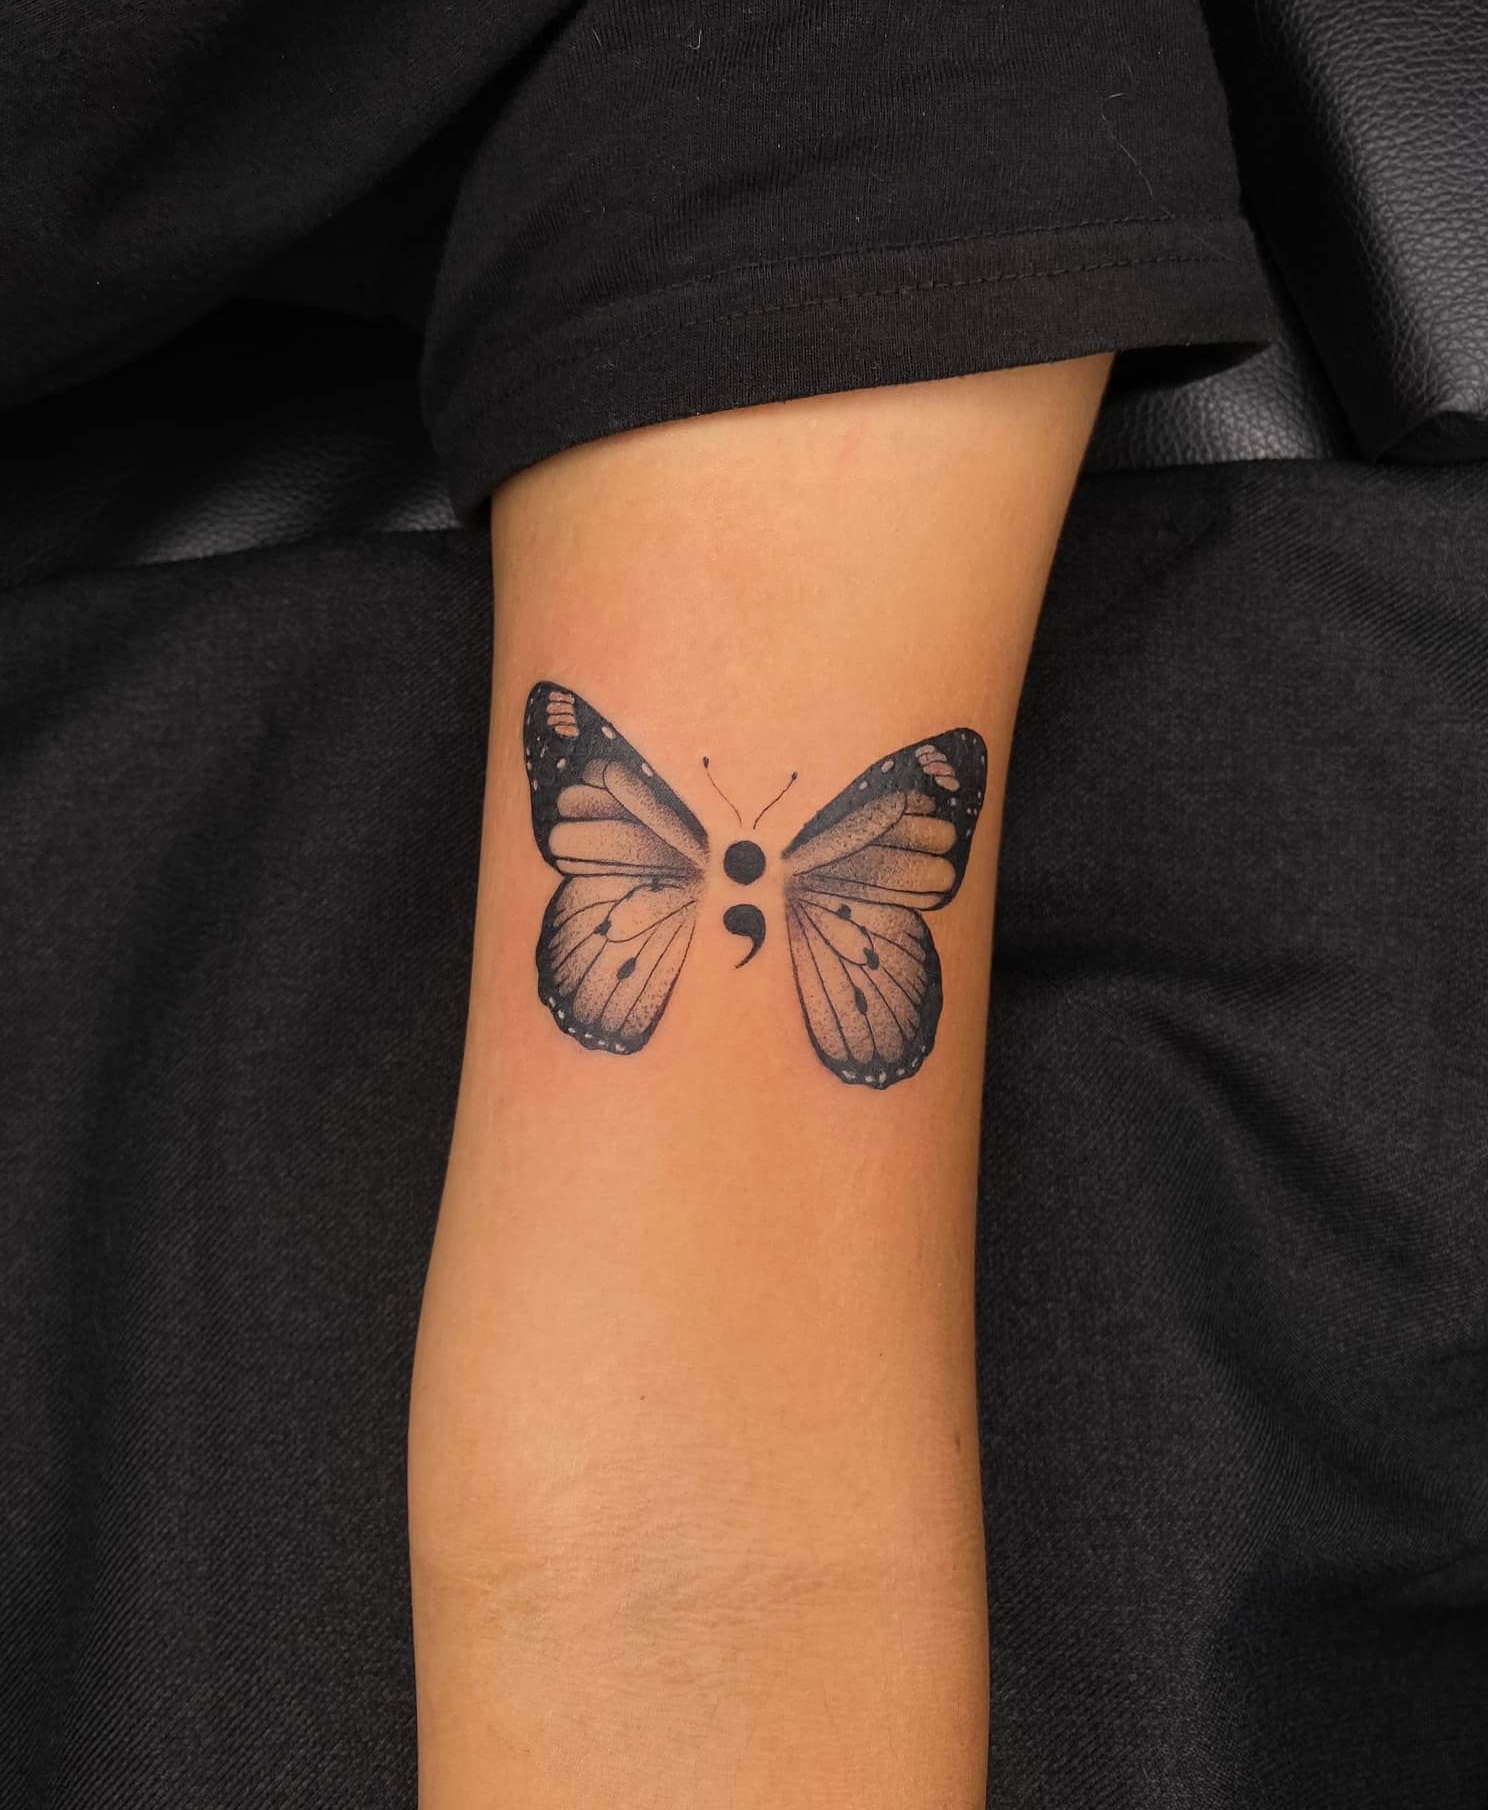 Butterfly Semicolon Tattoo on Arm